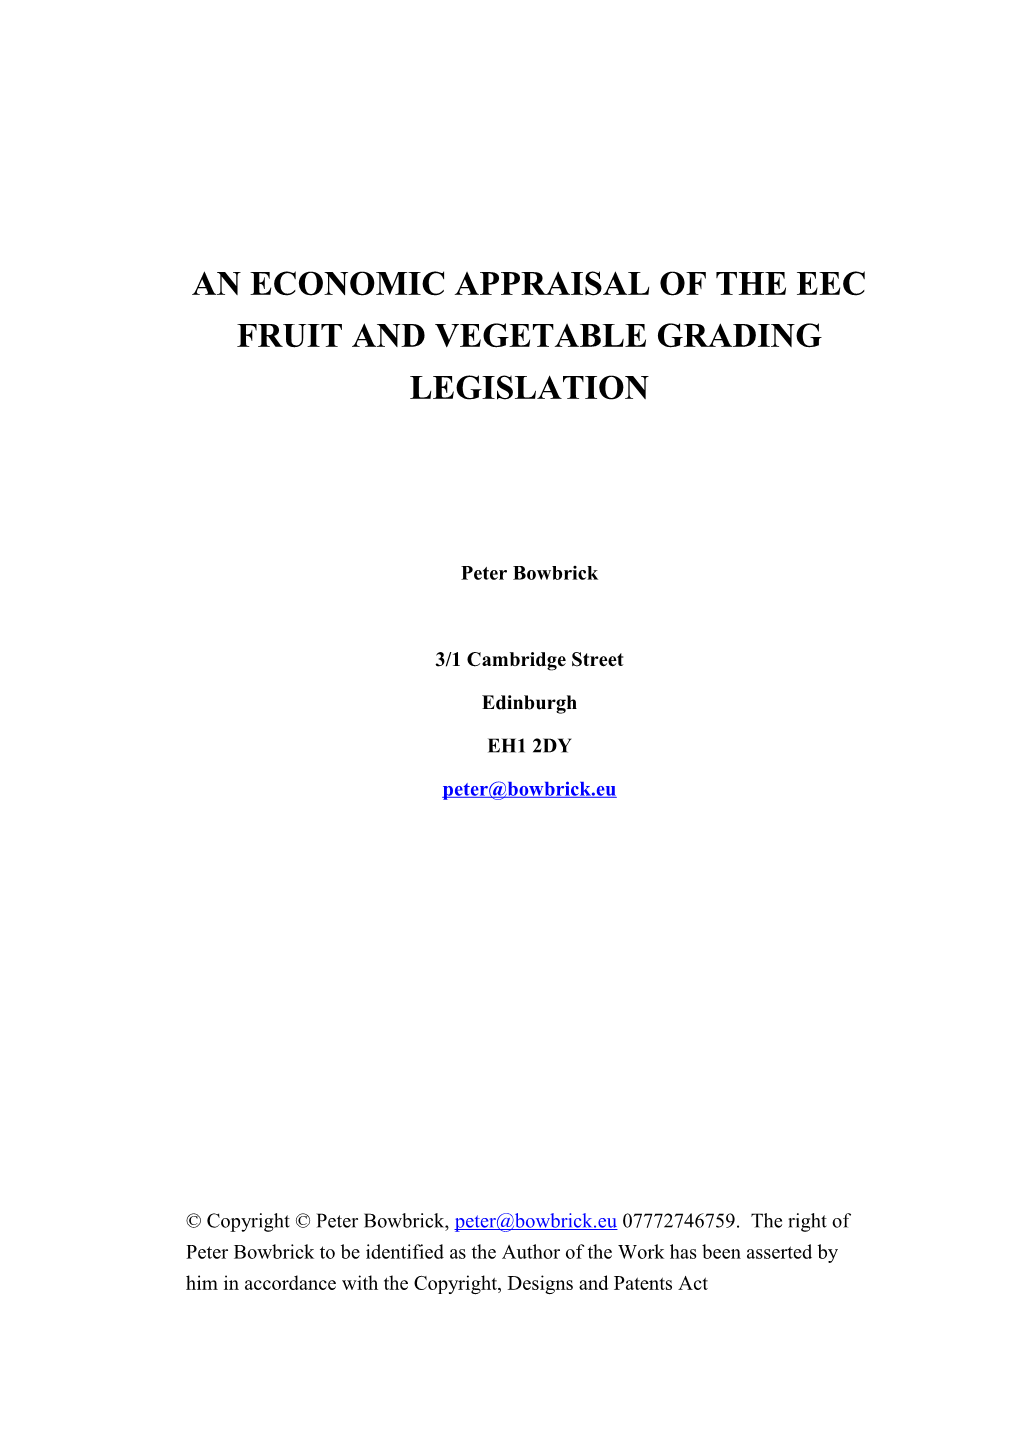 An Economic Appraisal of the Eec Fruit and Vegetable Grading Legislation